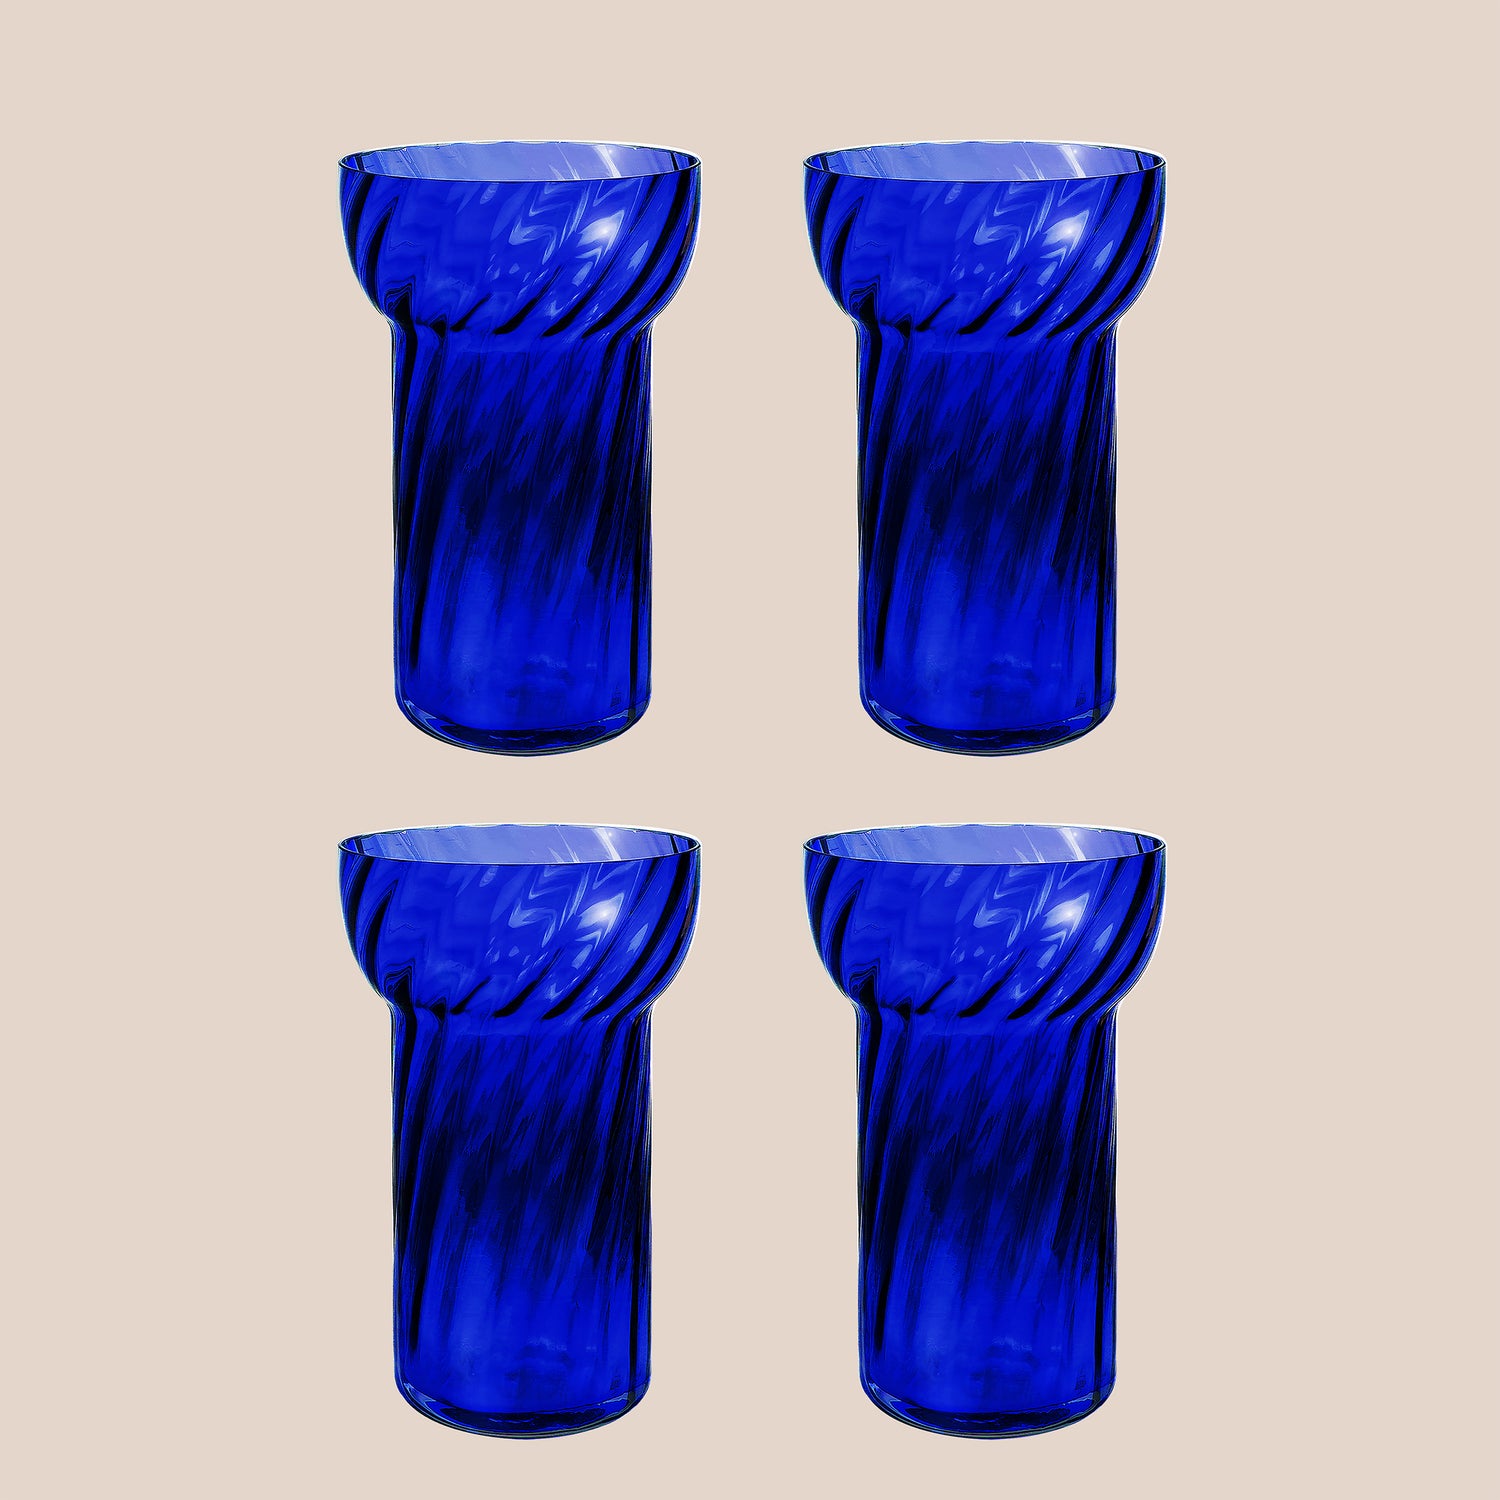 Parasol, set of 4 glasses